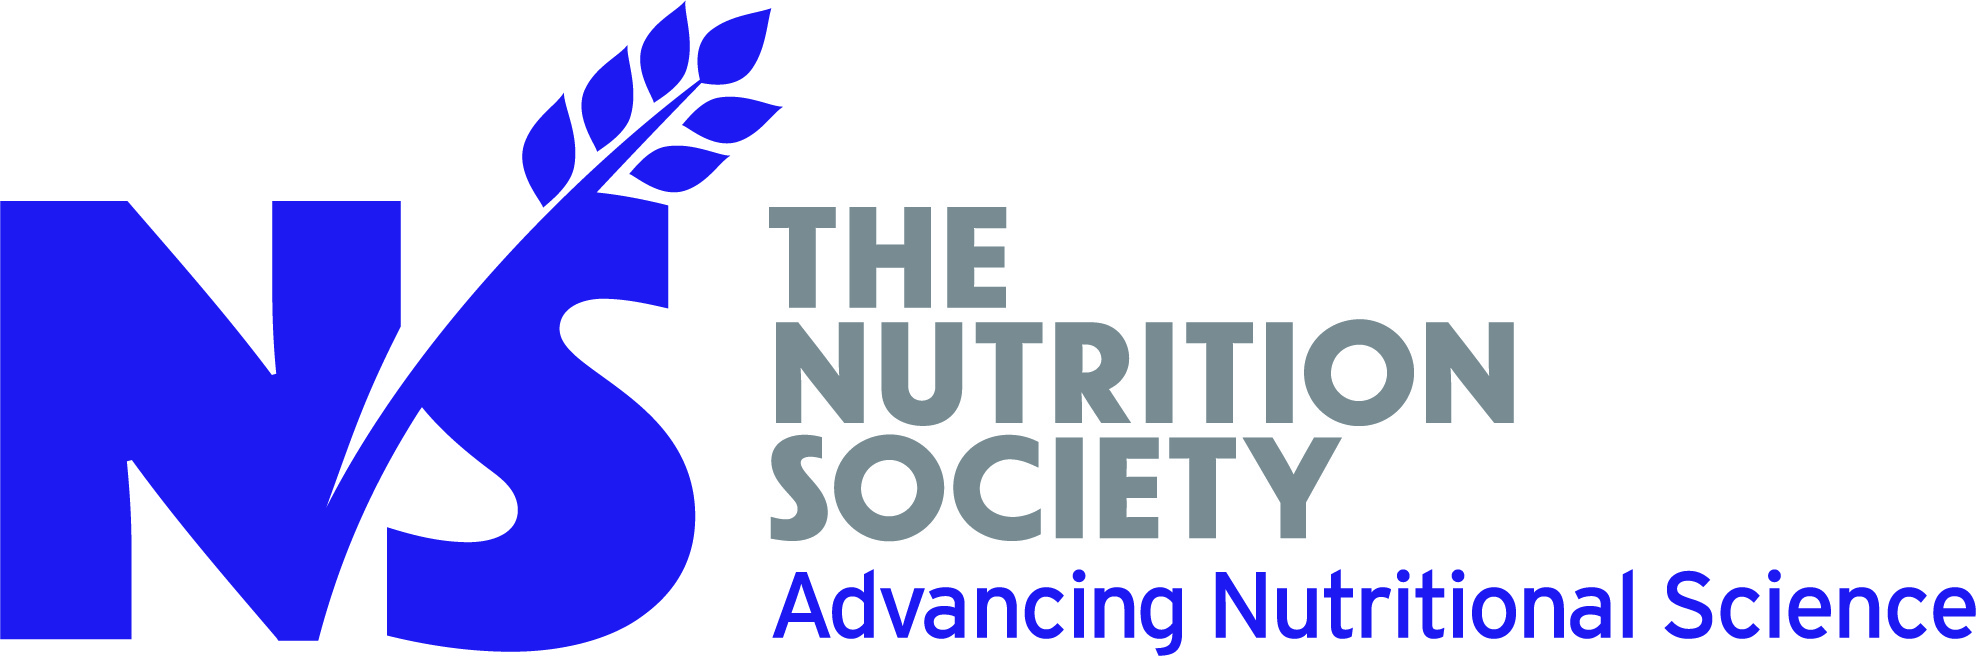 Mark Hollingsworth The Nutrition Society logo